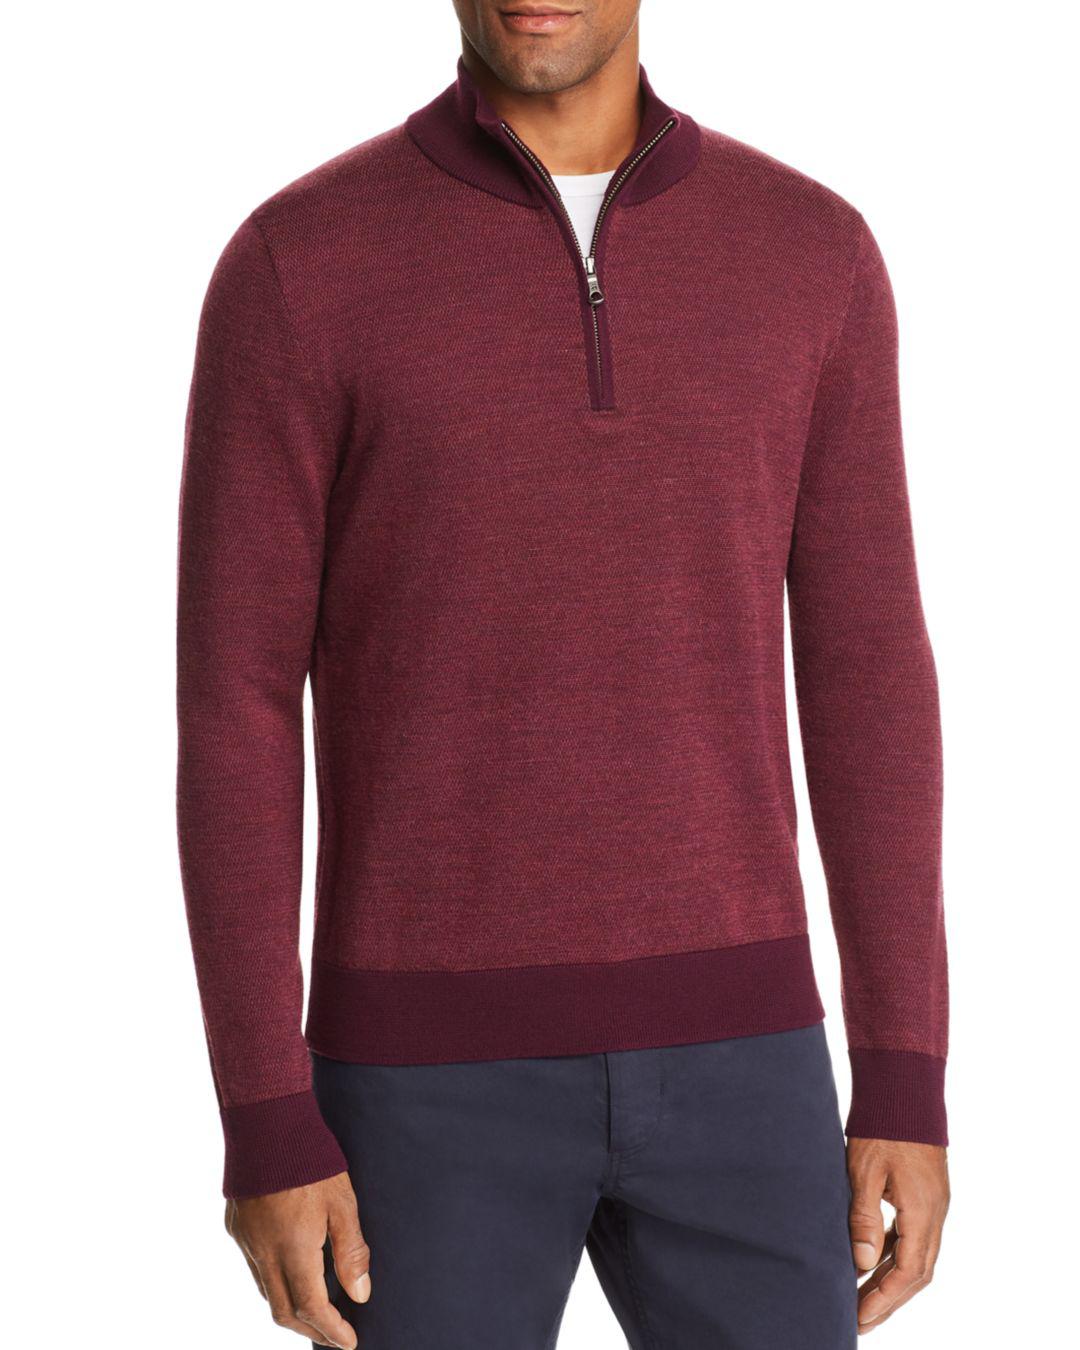 Lyst - Brooks Brothers Birdseye Half Zip Sweater in Purple for Men